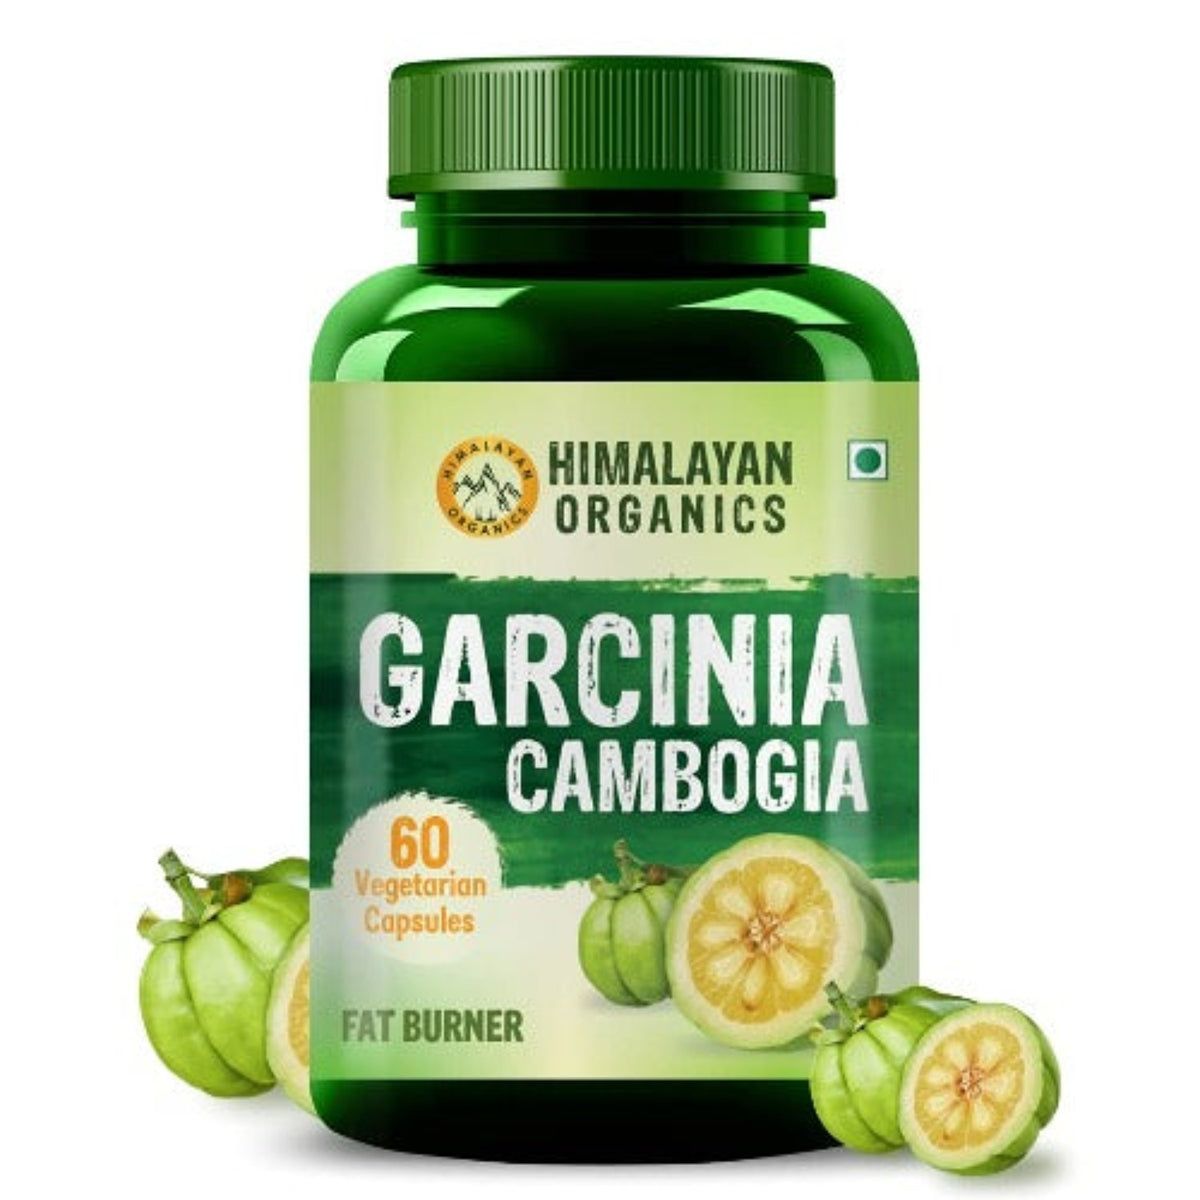 Himalayan Organics Garcinia Cambogia Nahrungsergänzungsmittel zur Gewichtskontrolle, 60 vegetarische Kapseln